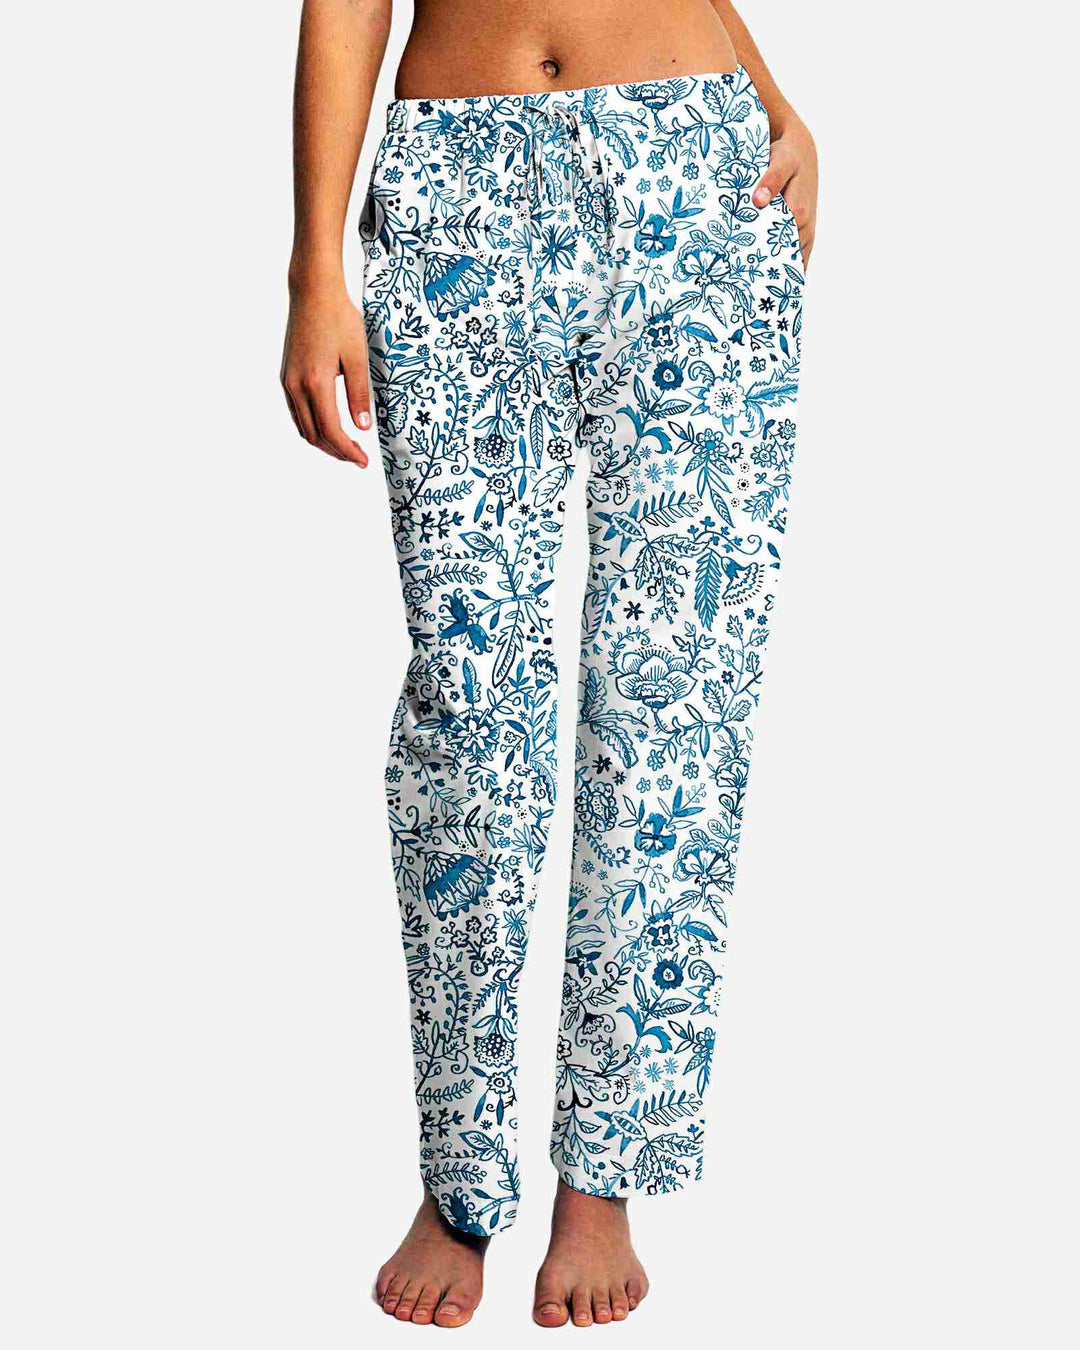 Womens cotton pyjamas pants - white blue Chandler pattern